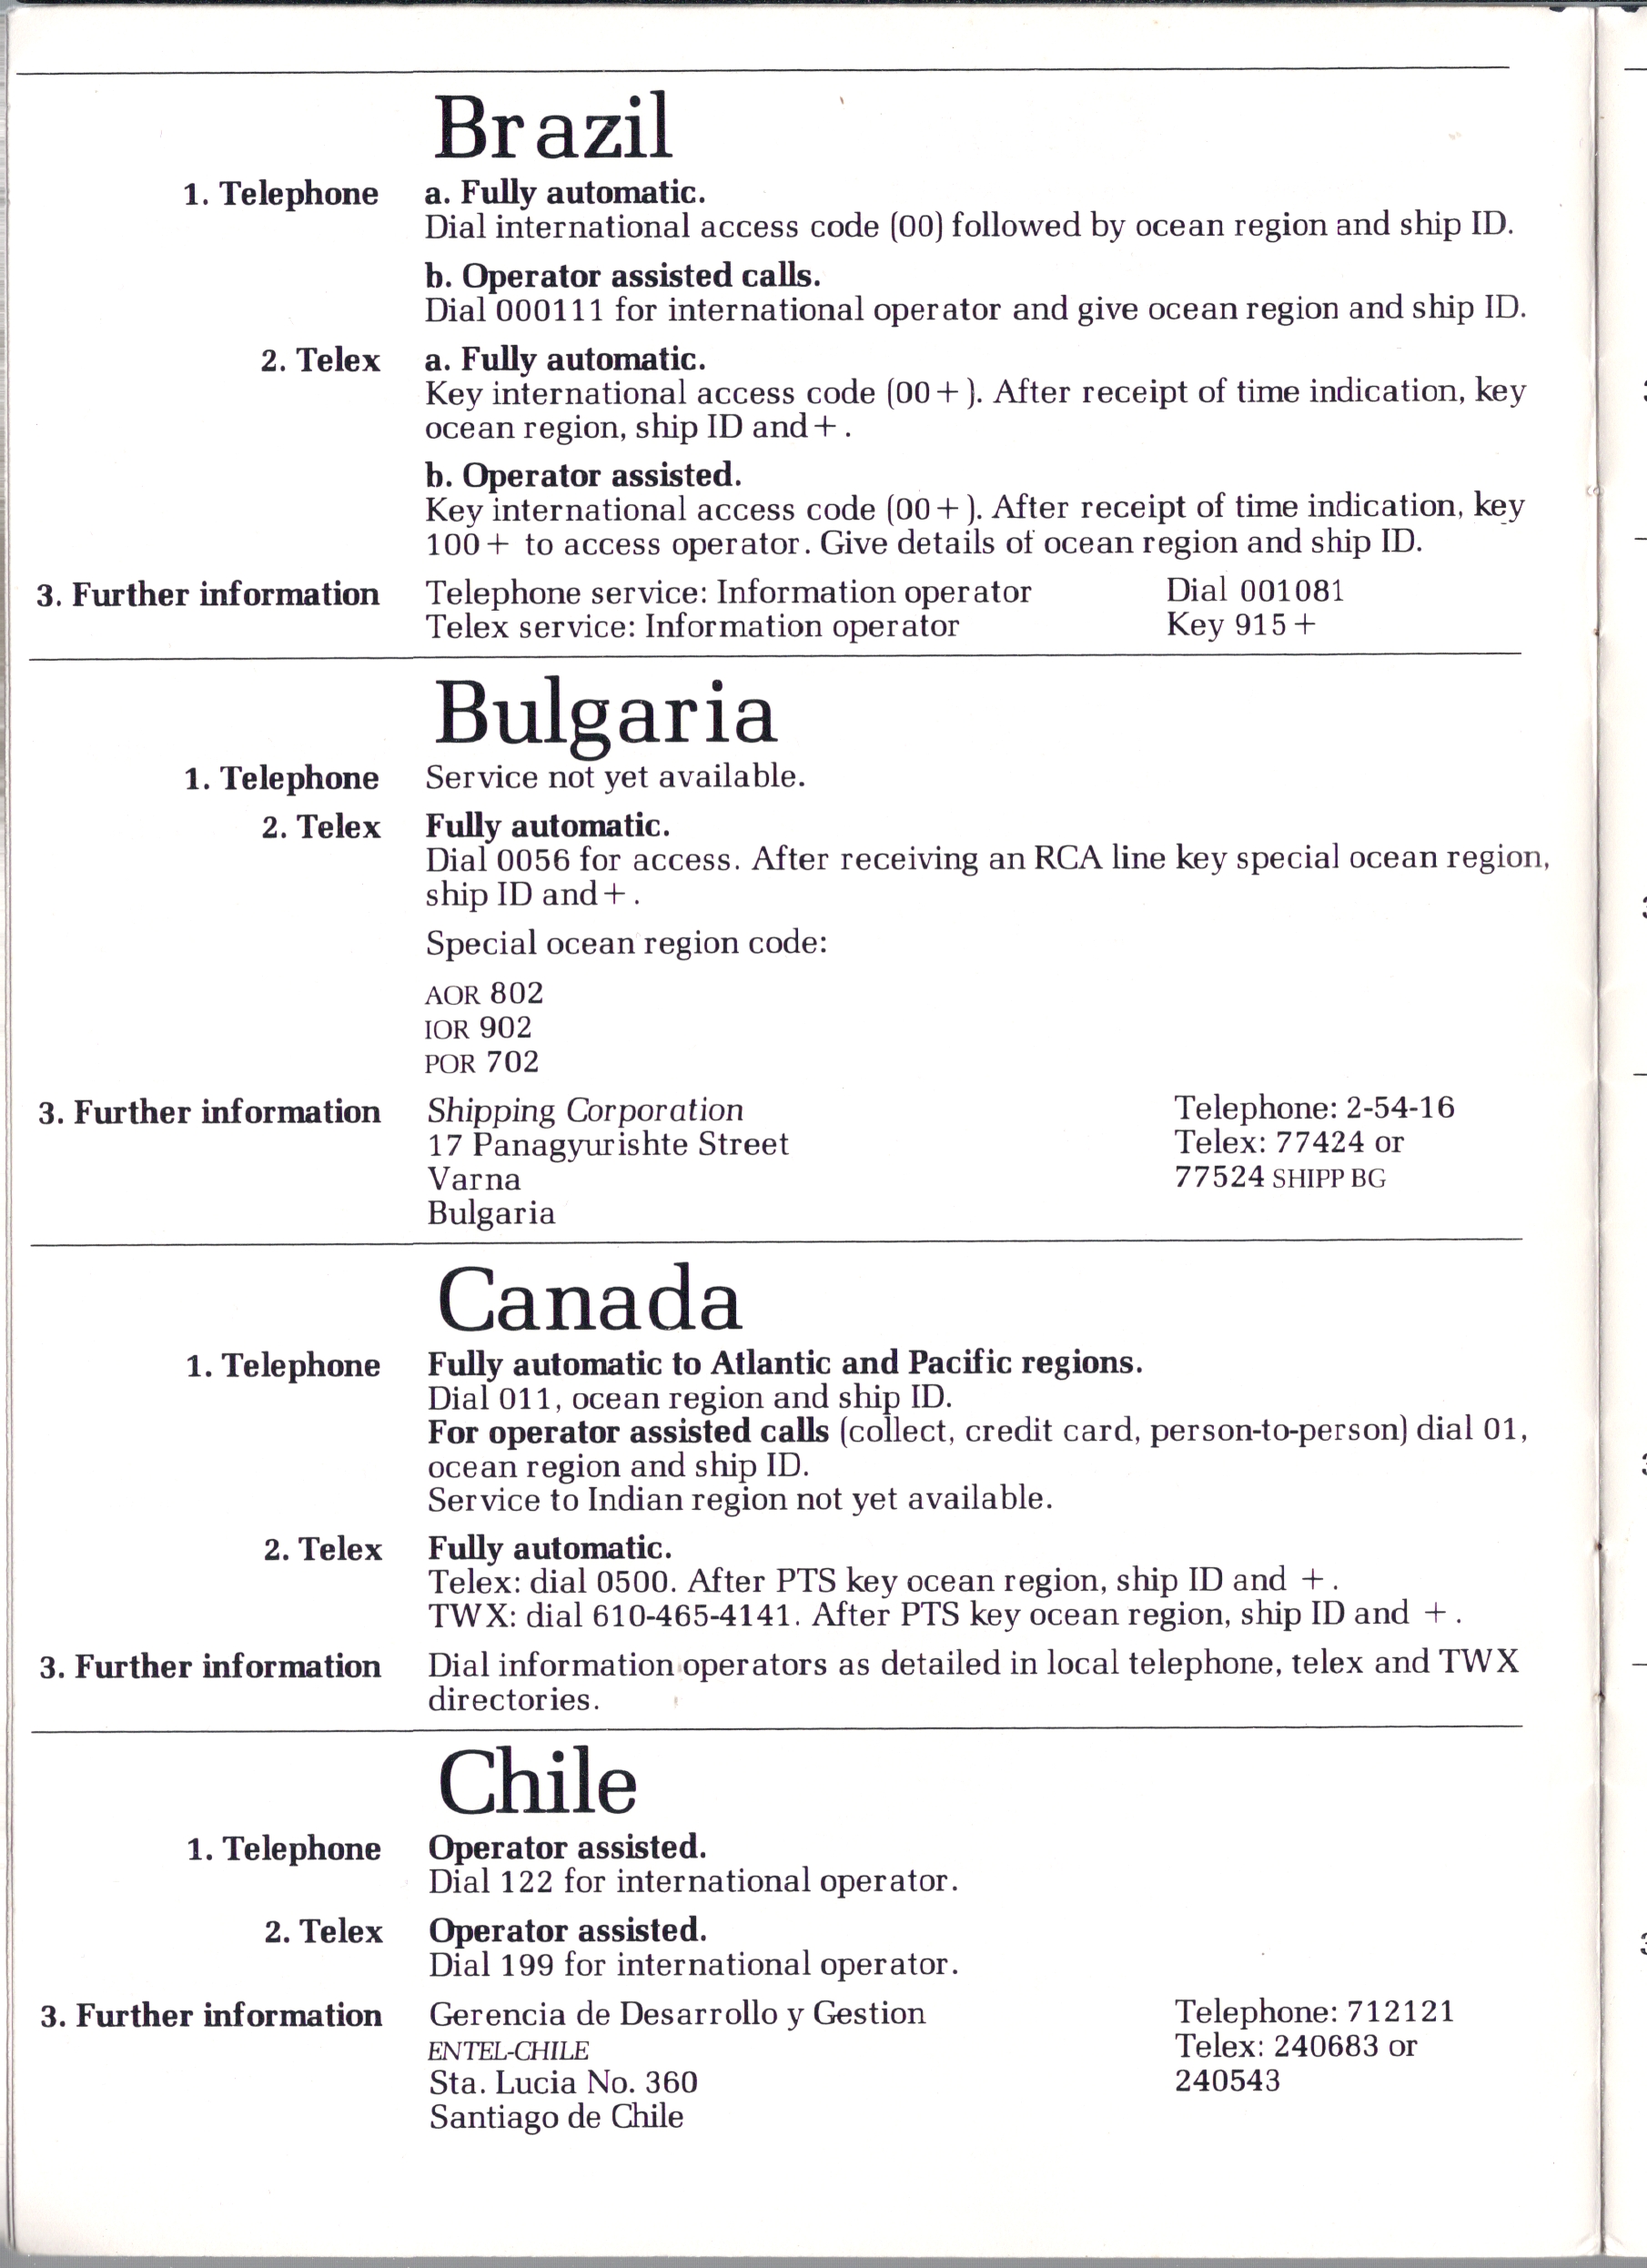 SHORE-TO-SHIP CALLING PROCEDURES 1982_05.JPG